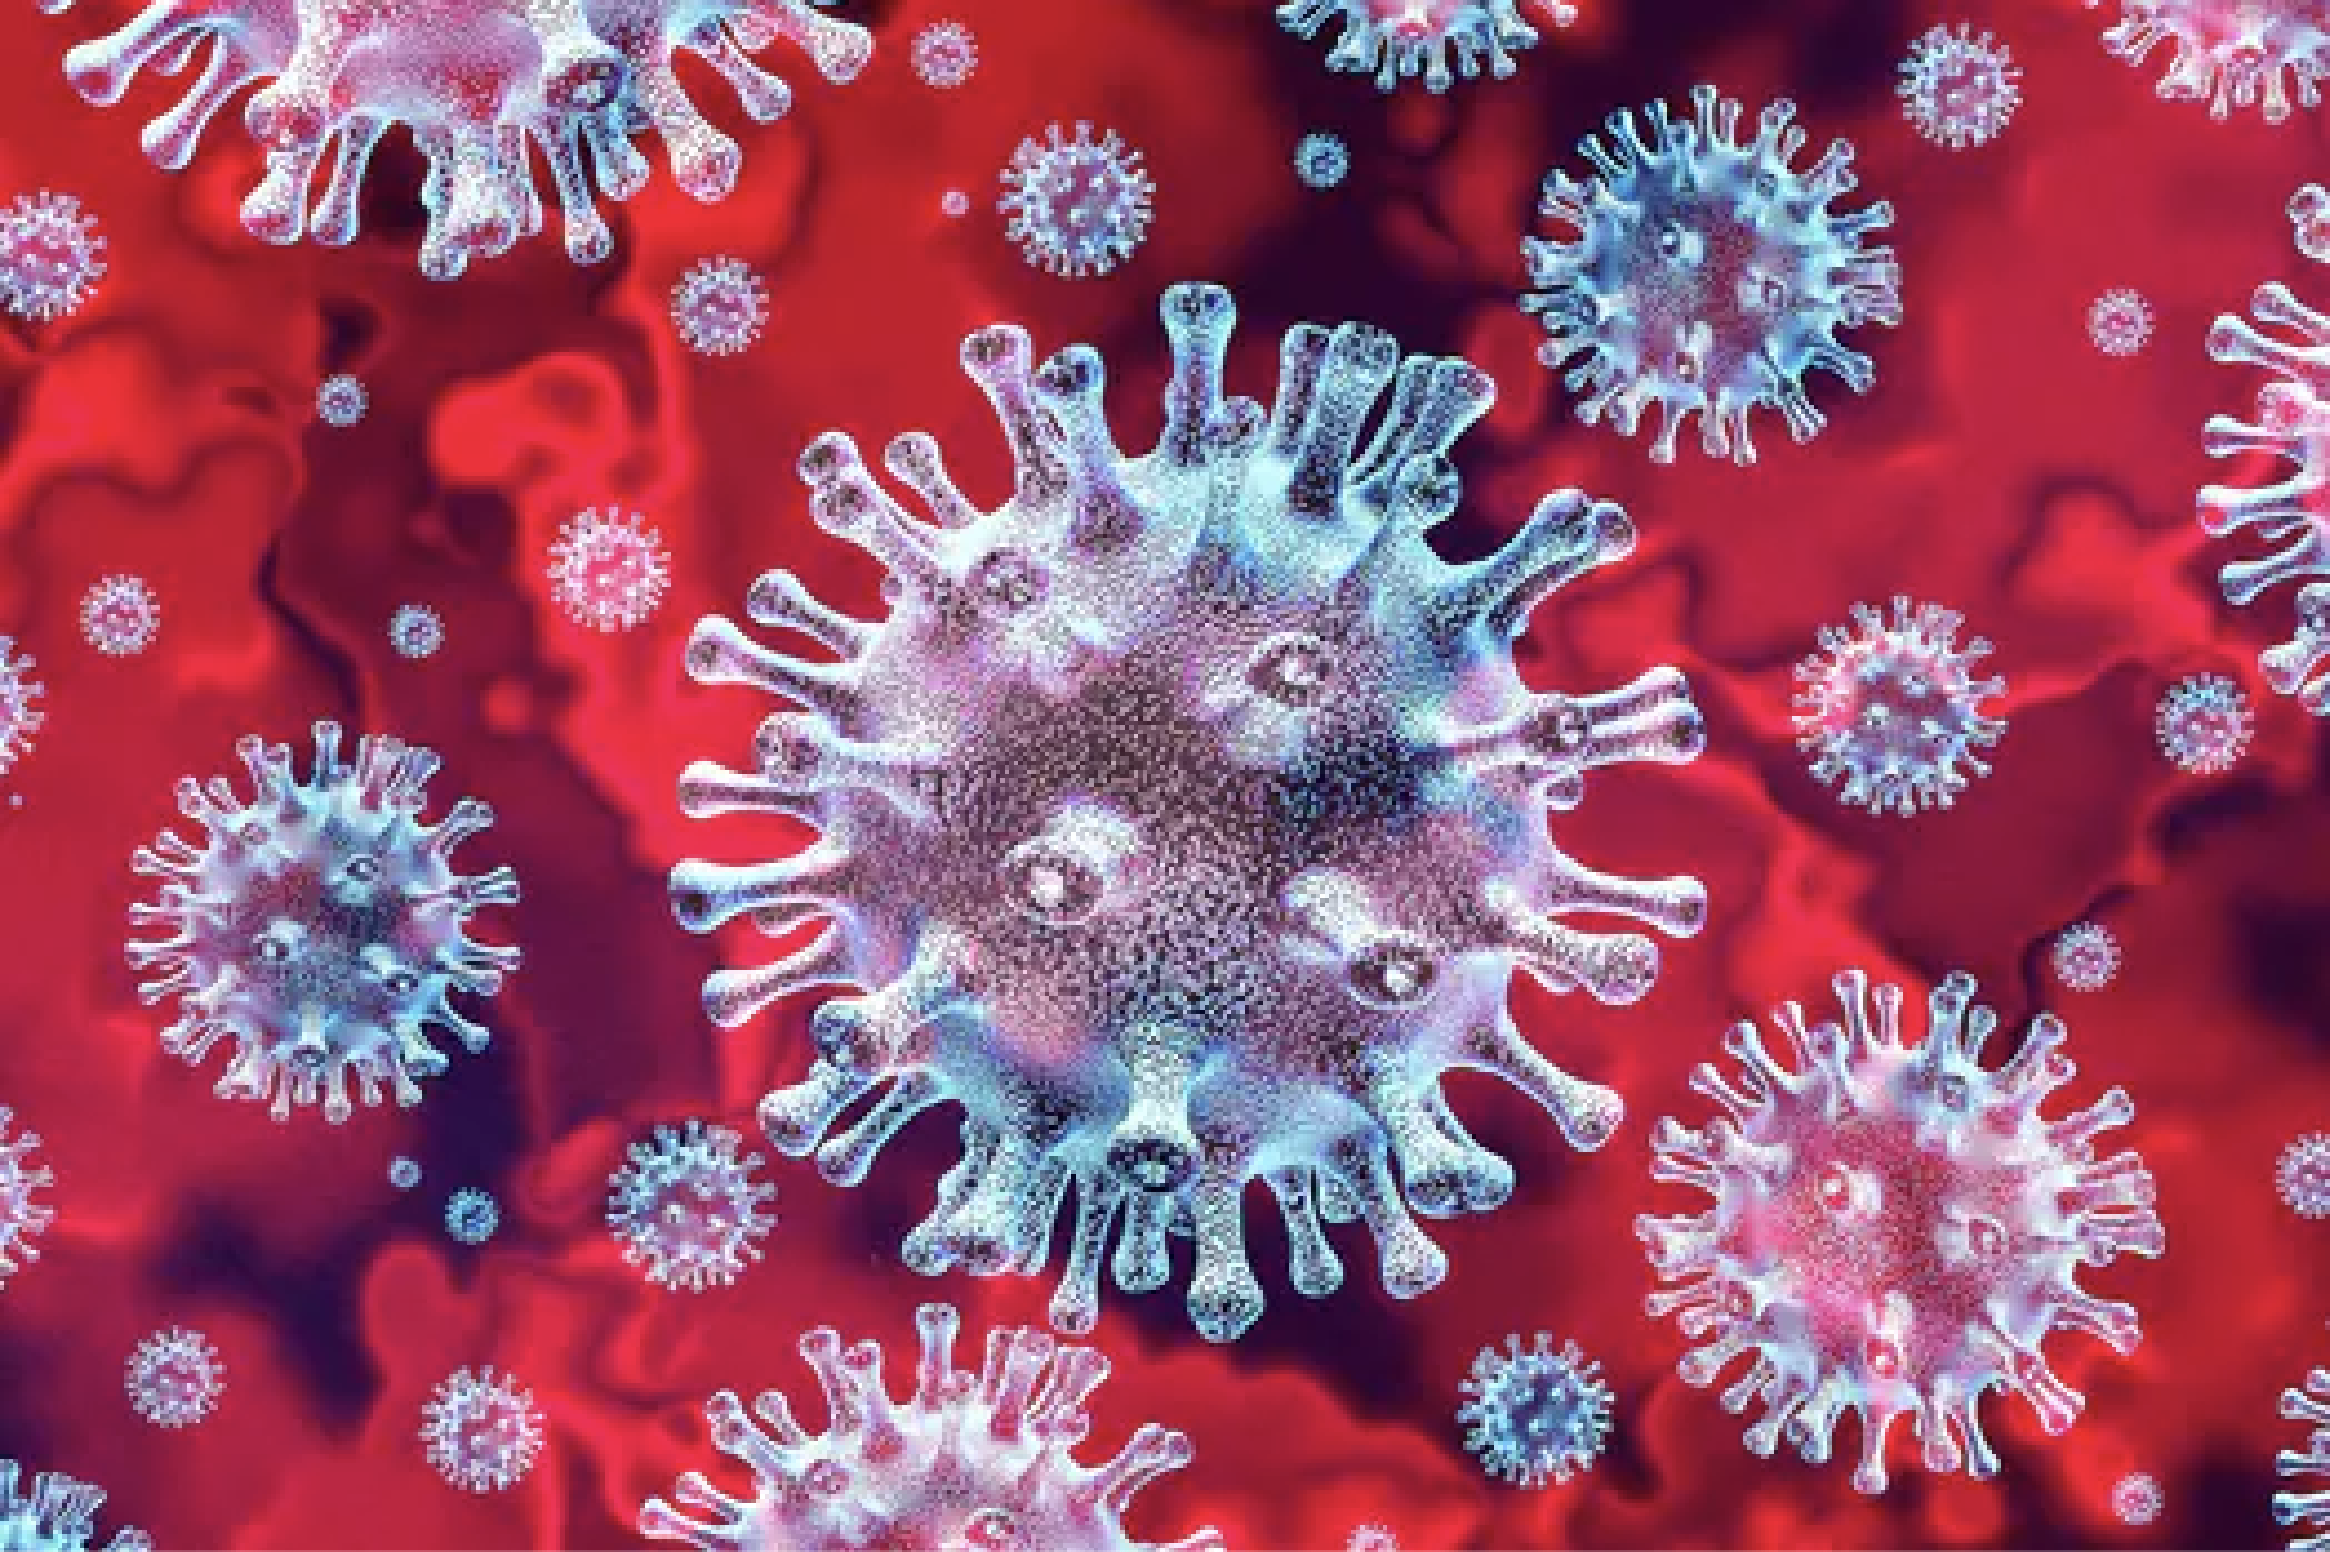 EXCLUSIVE: Sanitizer opposed by CDC kills coronavirus “surrogate” in lab tests (SBG)